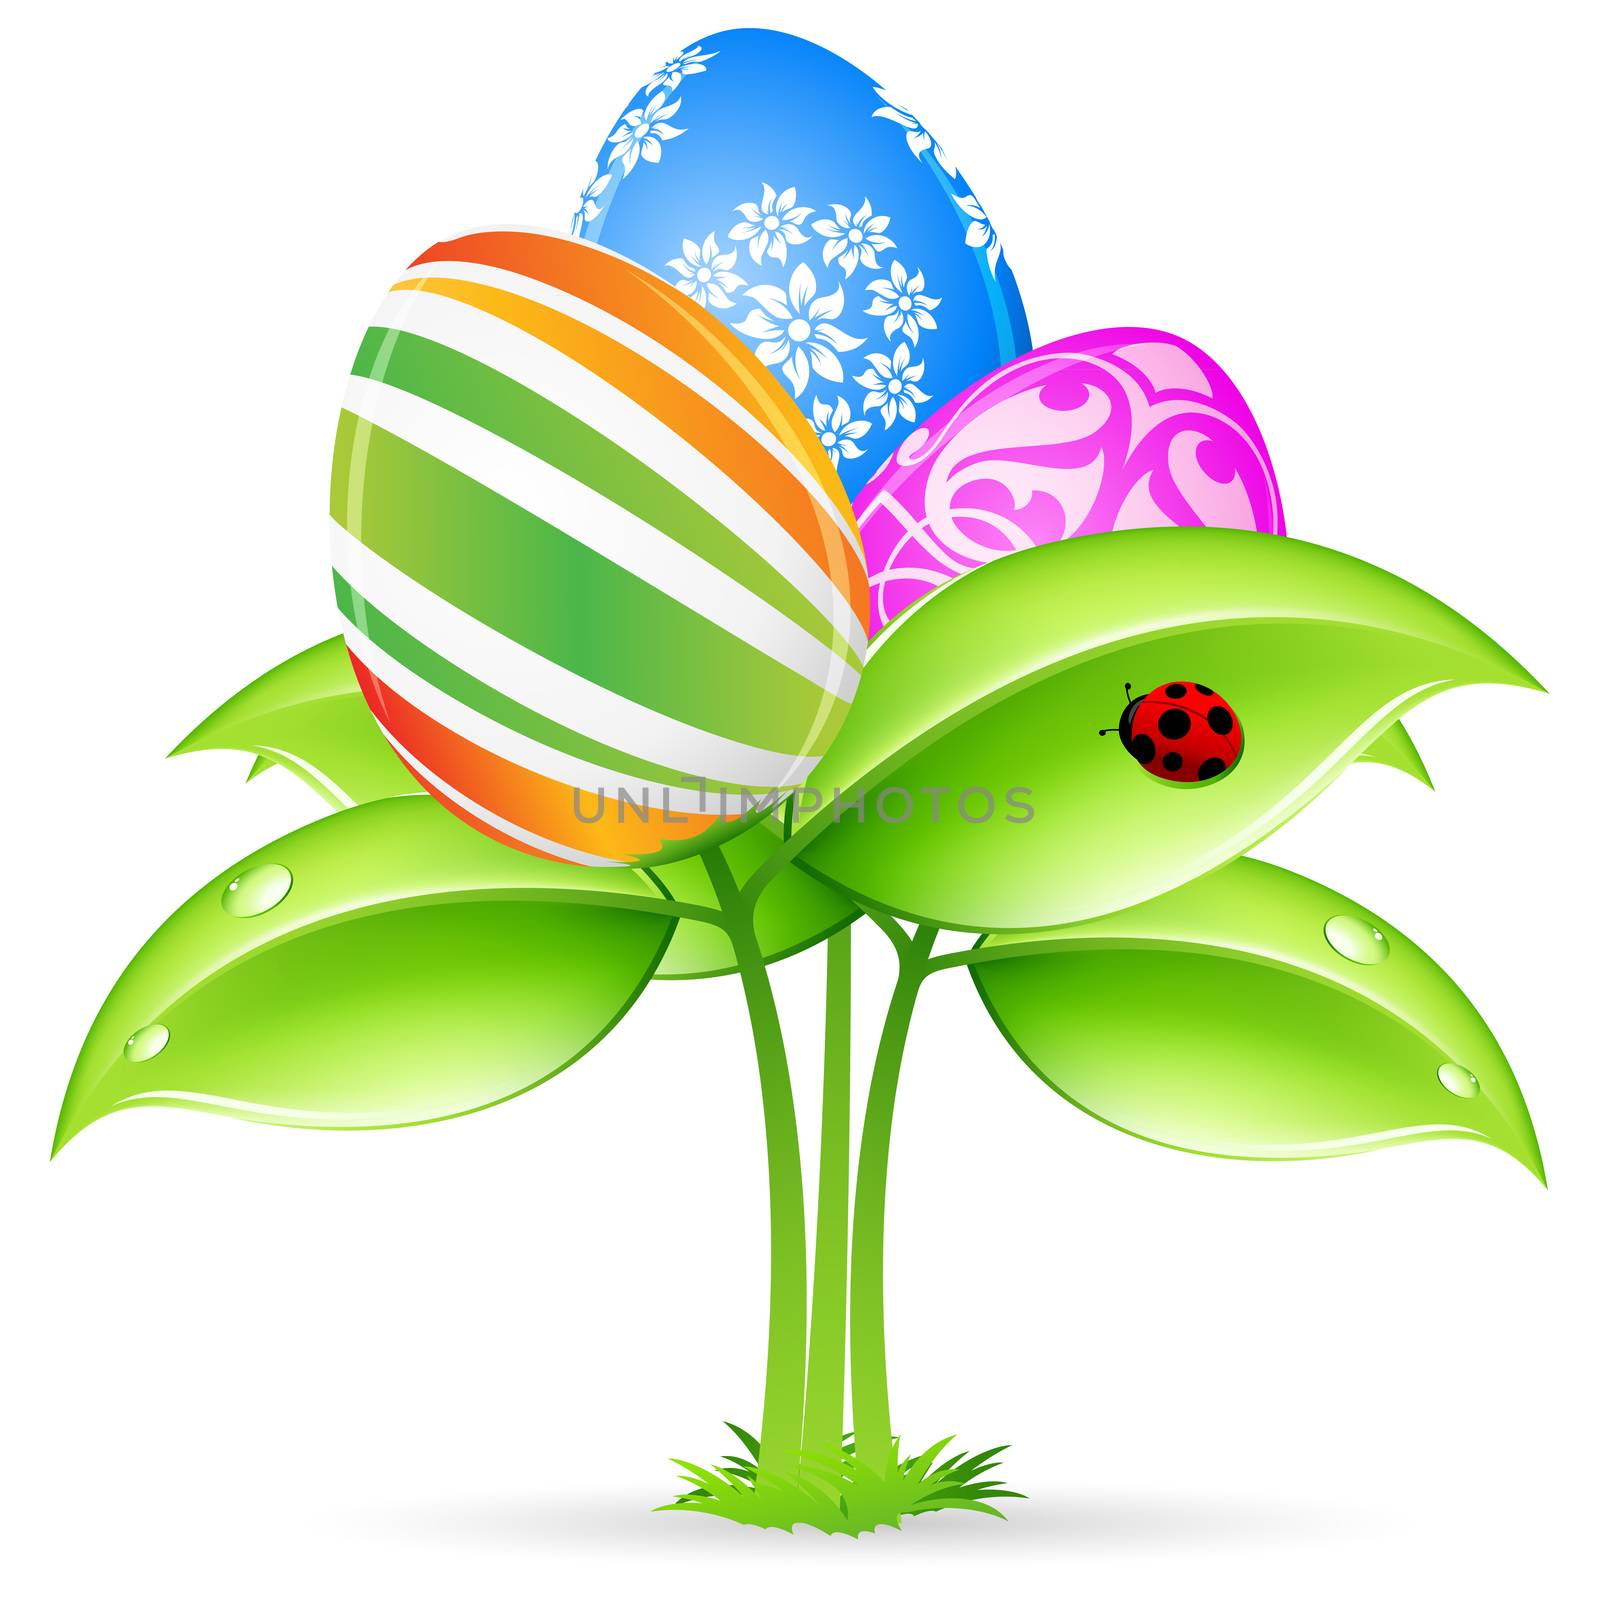 Easter eggs-flowers with ladybug isolated on white background